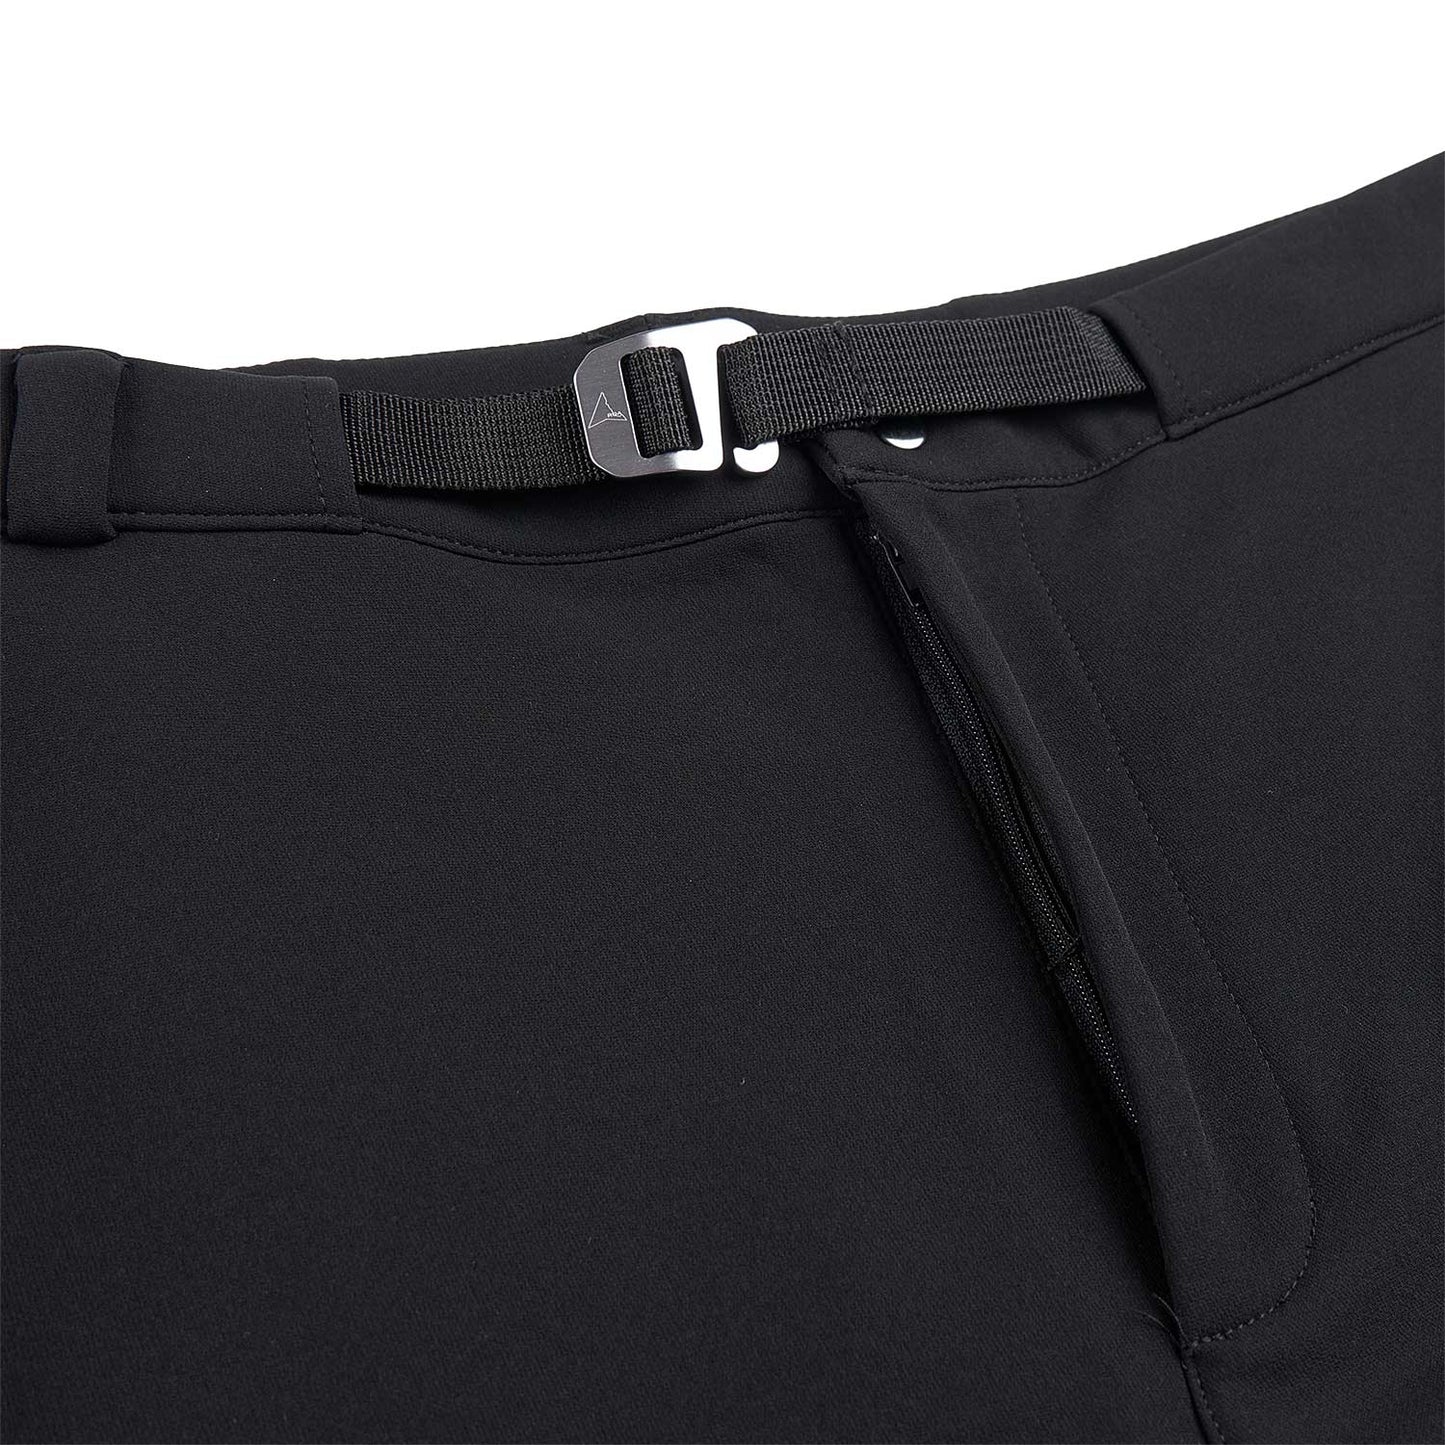 roa technical trousers softshell (schwarz)